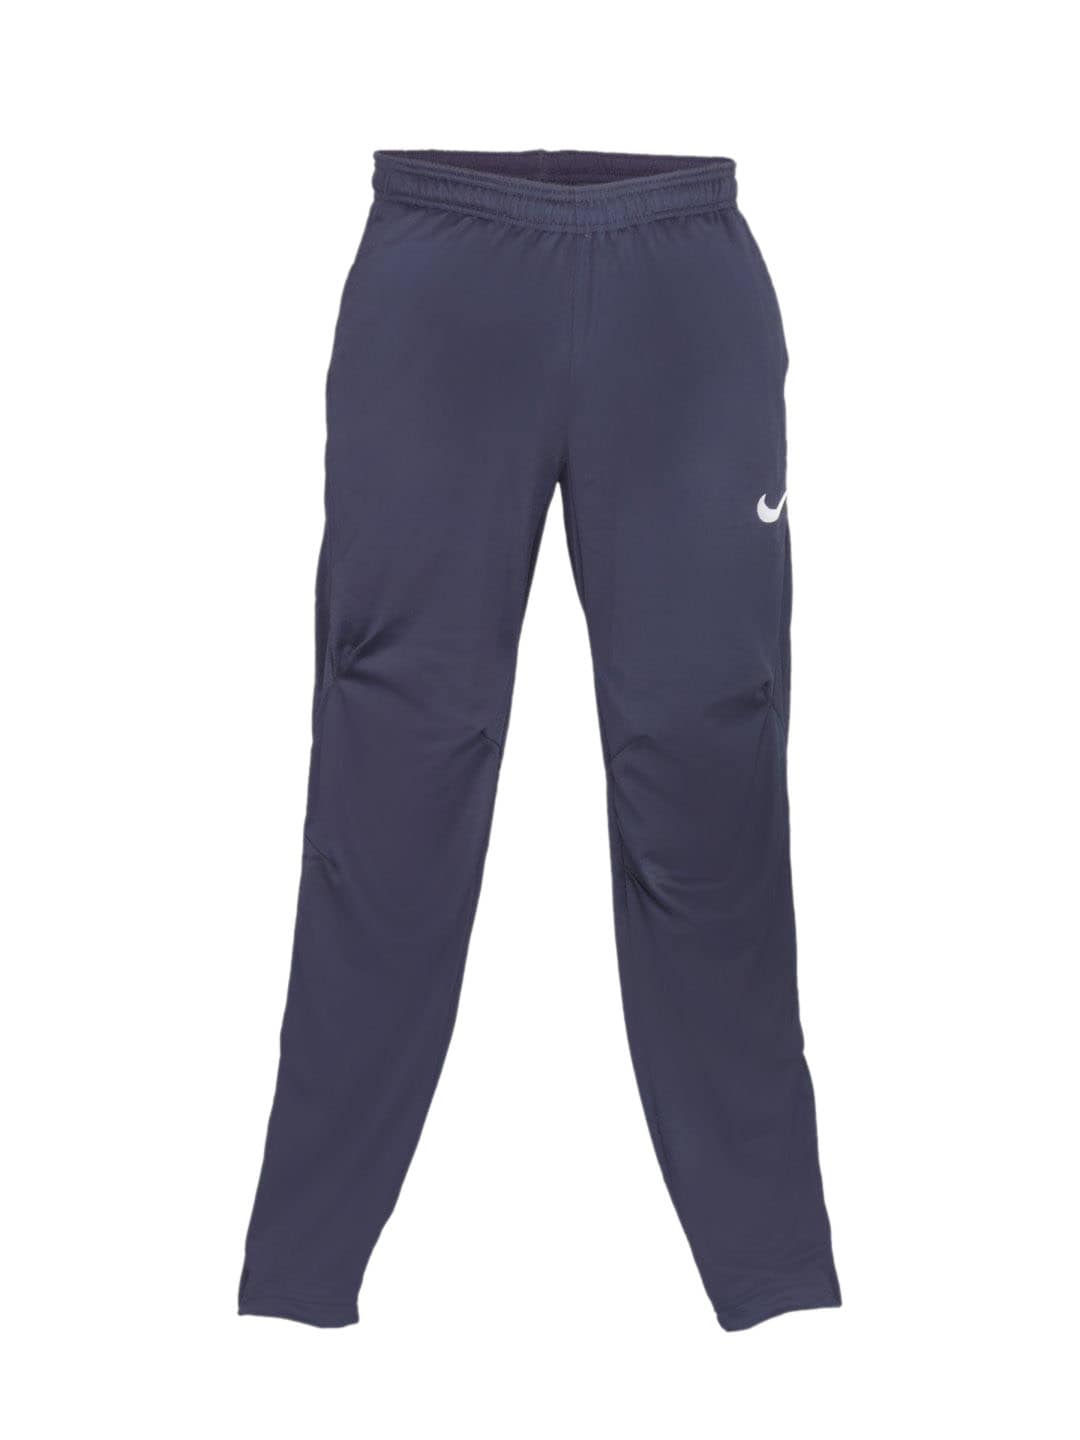 Nike Men Training Knit Navy Blue Track Pant